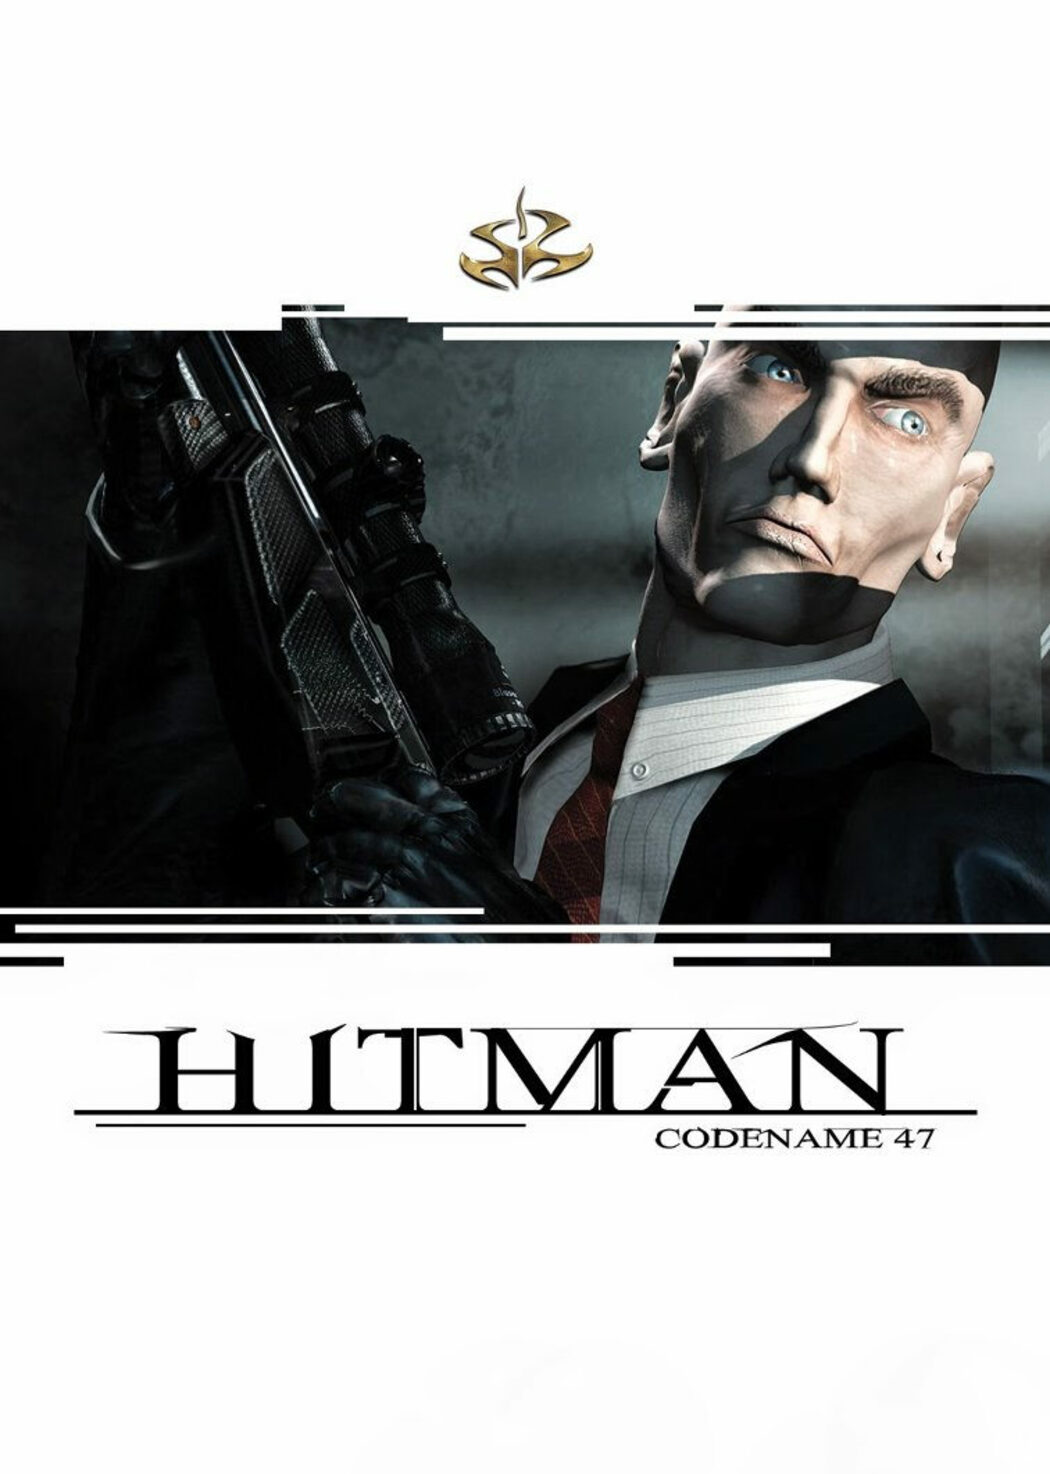 Hitman 3 - Confere os requisitos mínimos e recomendados